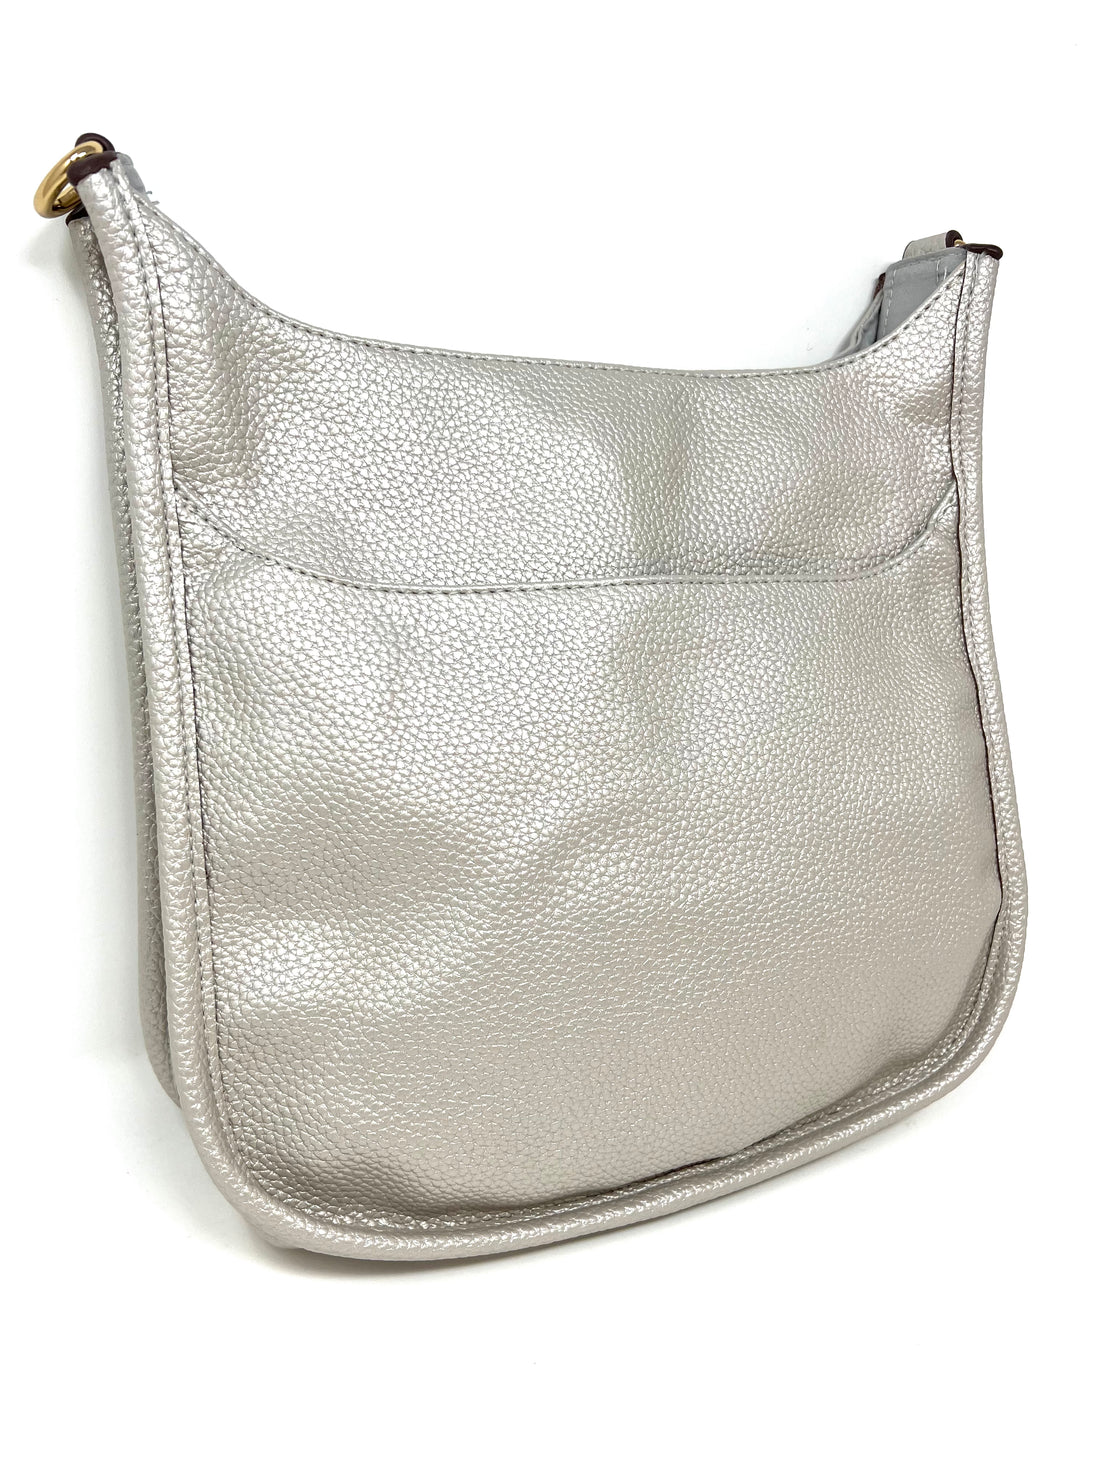 Saddle Bag in Vegan Leather in Silver